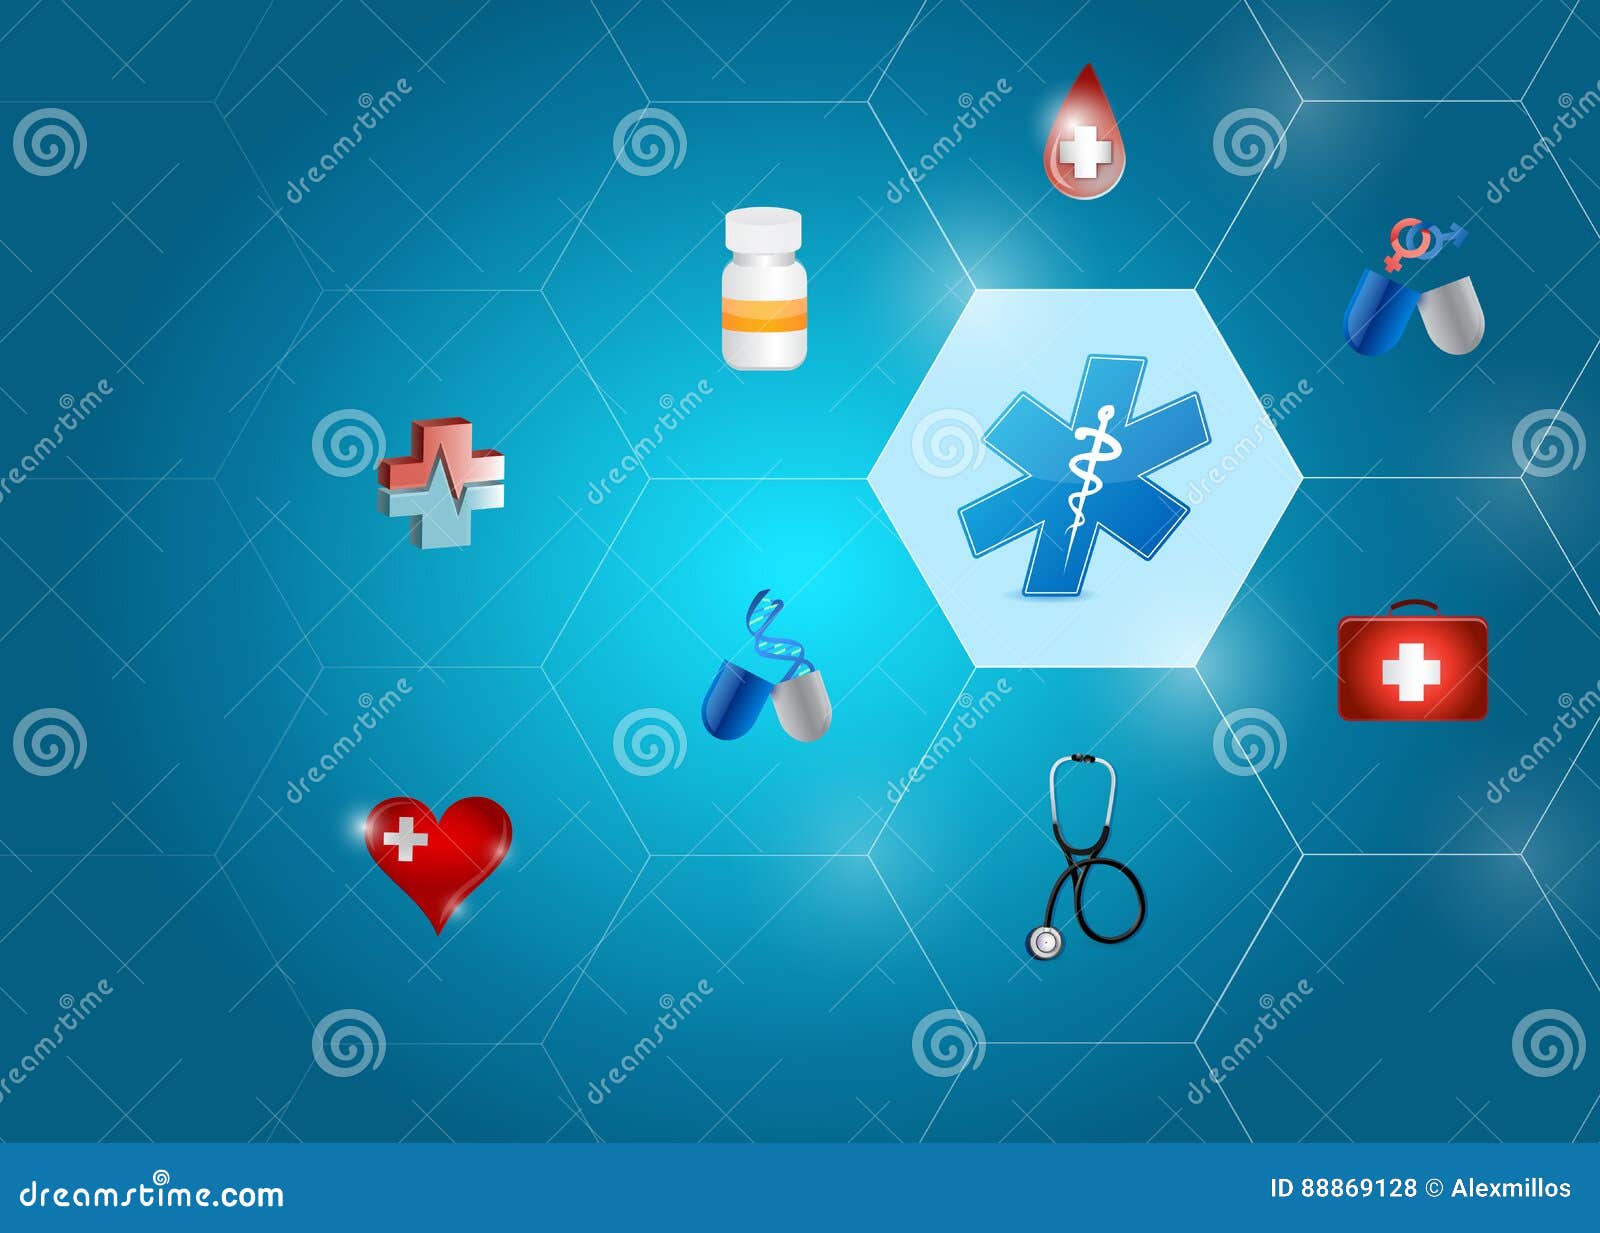 Medical Symbol Diagram Network Of Shapes Stock